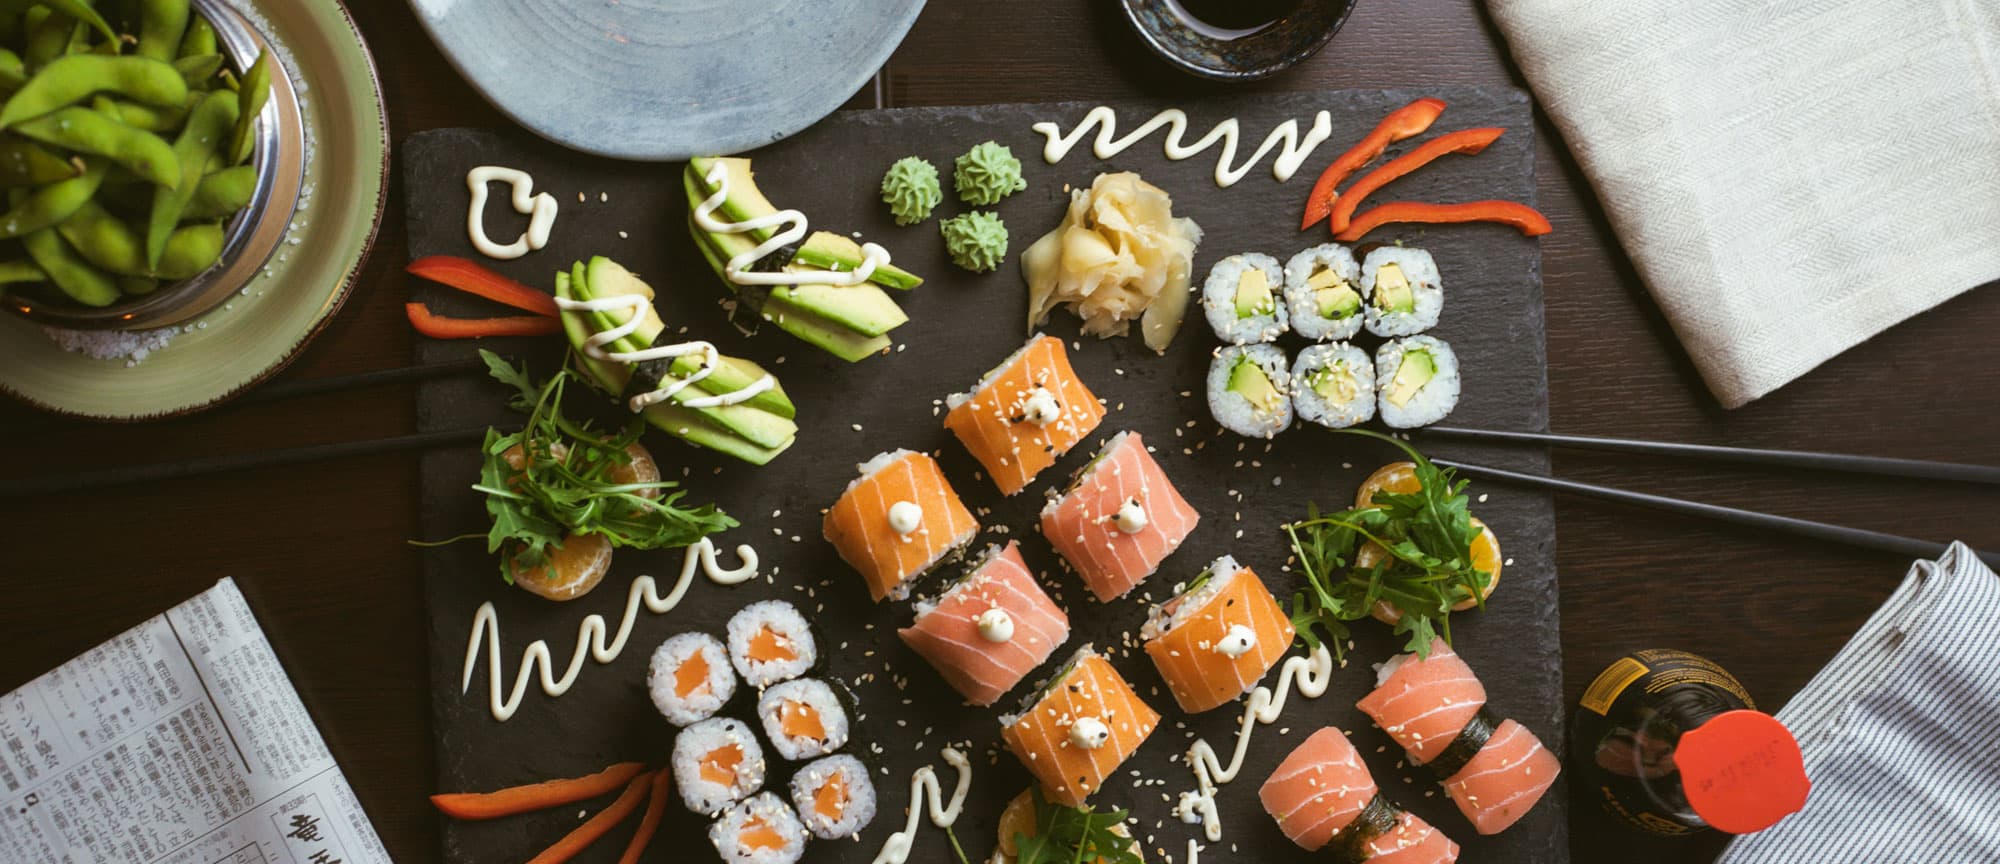 Sushi served on black tray